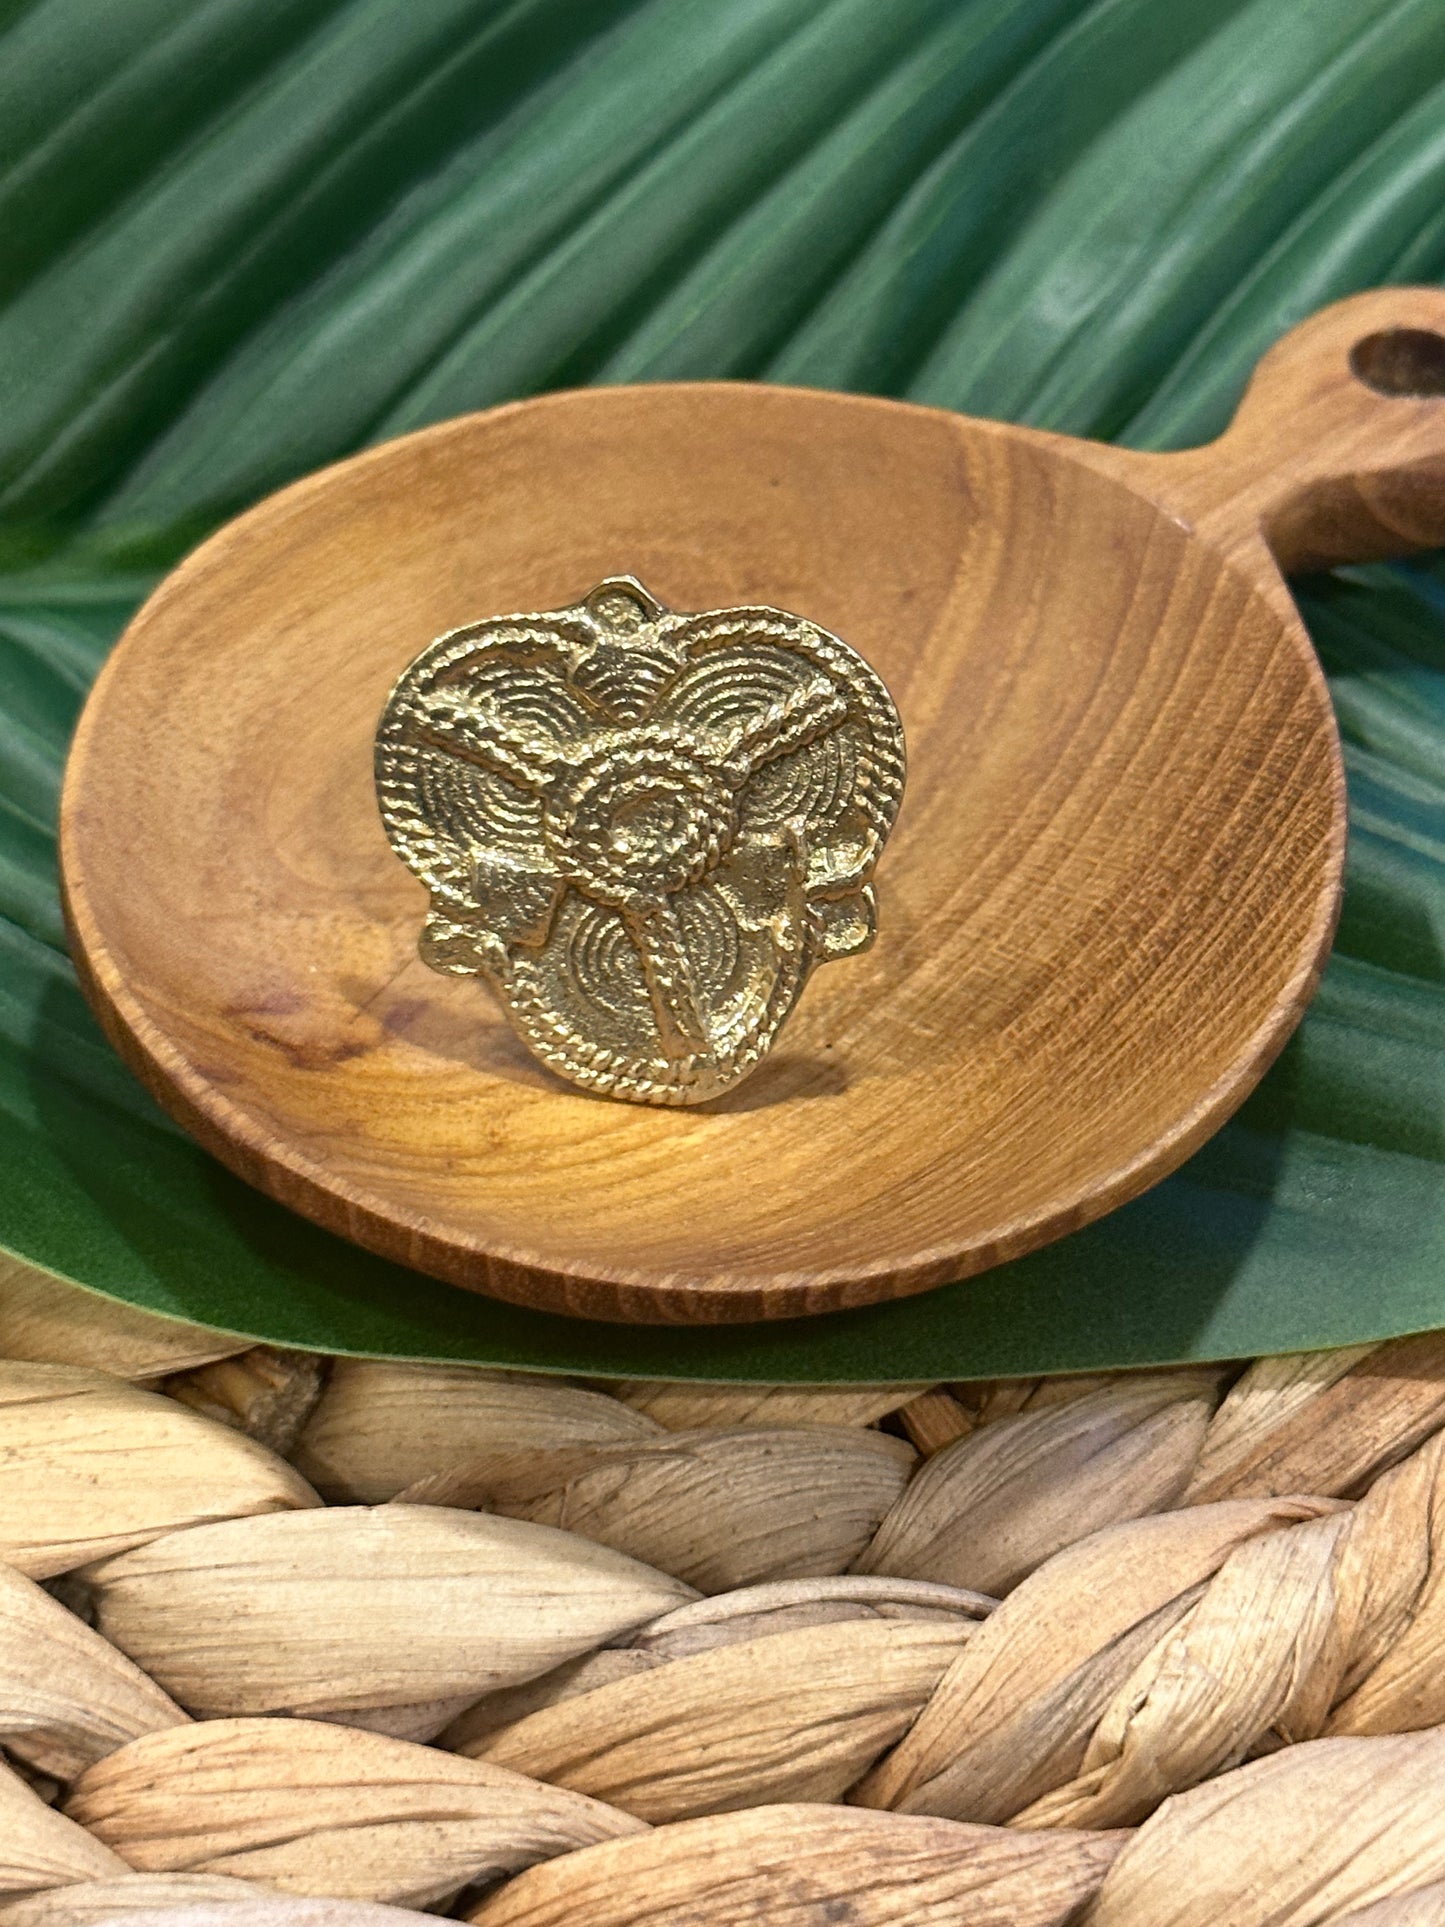 Zawadi: Artisanal Brass Ring with Intricate African Motifs